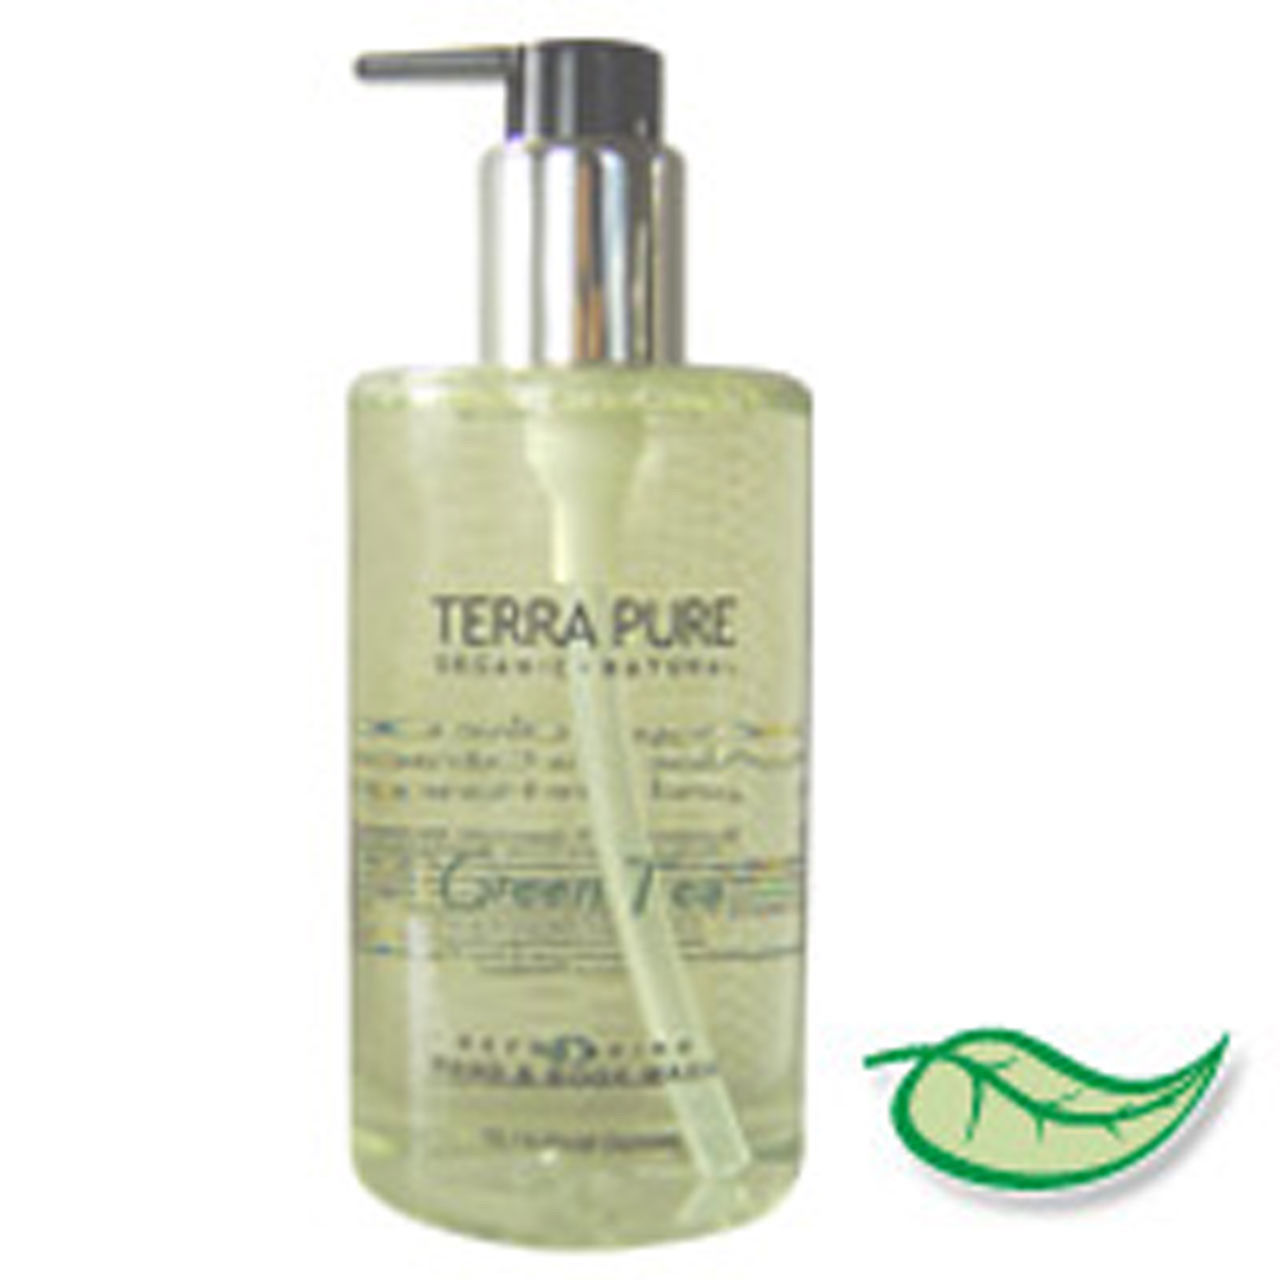 Terra Pure Green Tea Organic Body & Hand Wash Questions & Answers